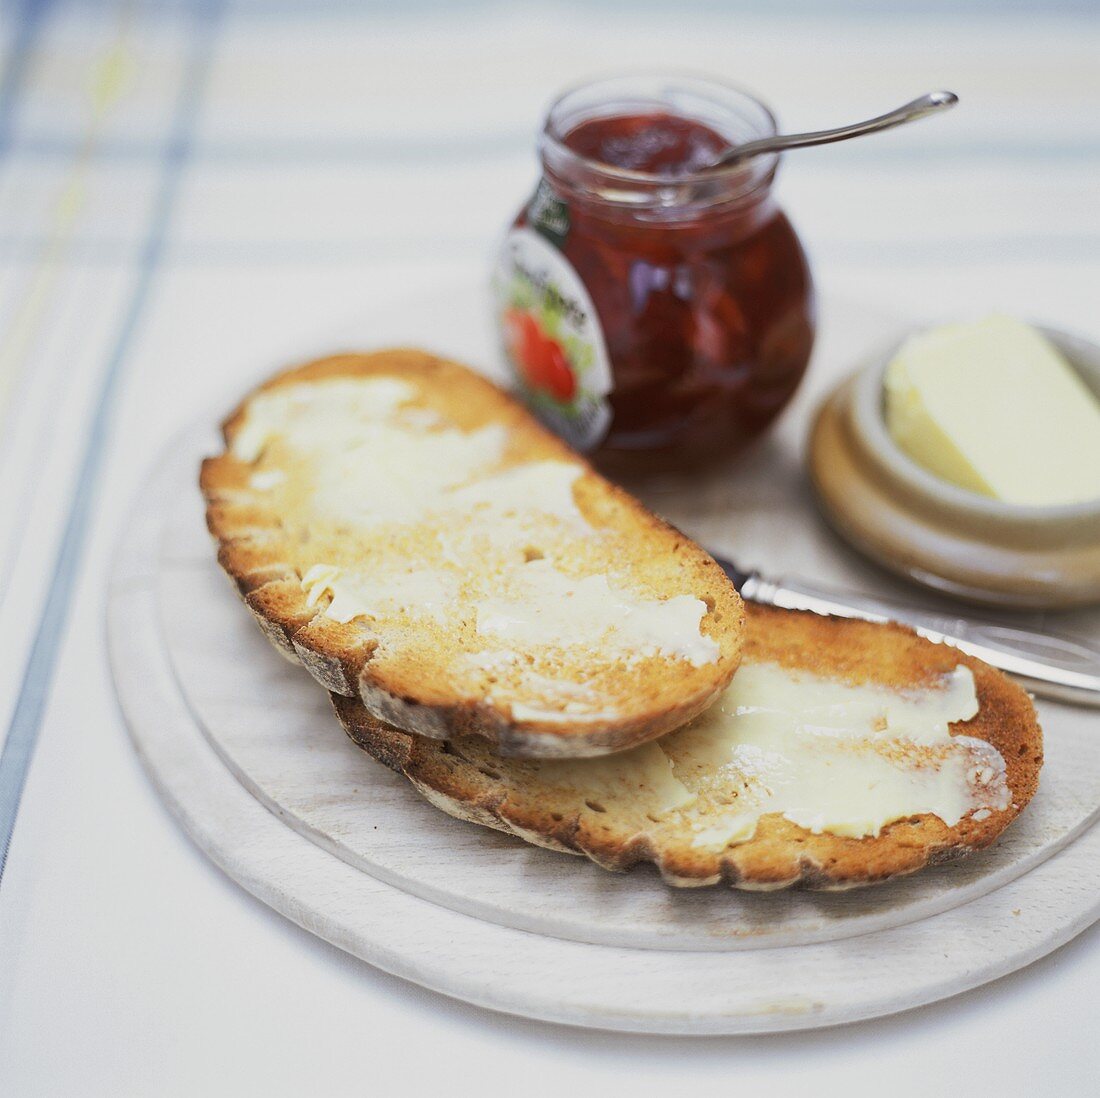 Getoastetes Brot mit Butter, dahinter Marmeladenglas